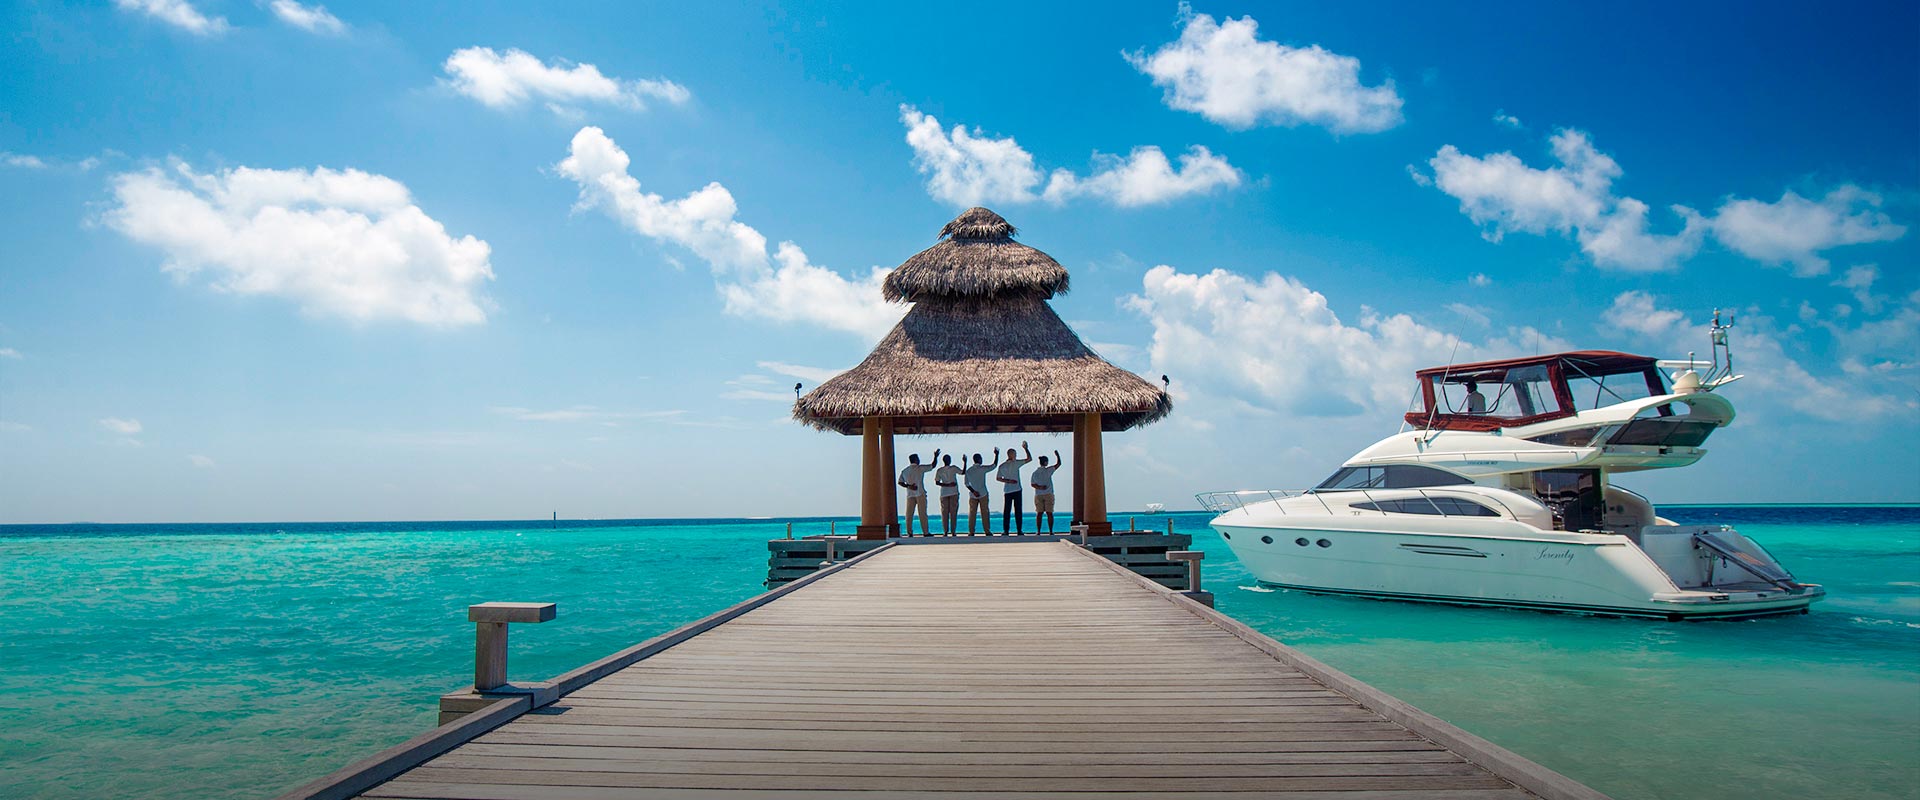 Maldives Resorts | Baros Maldives Luxury Resort Official Site